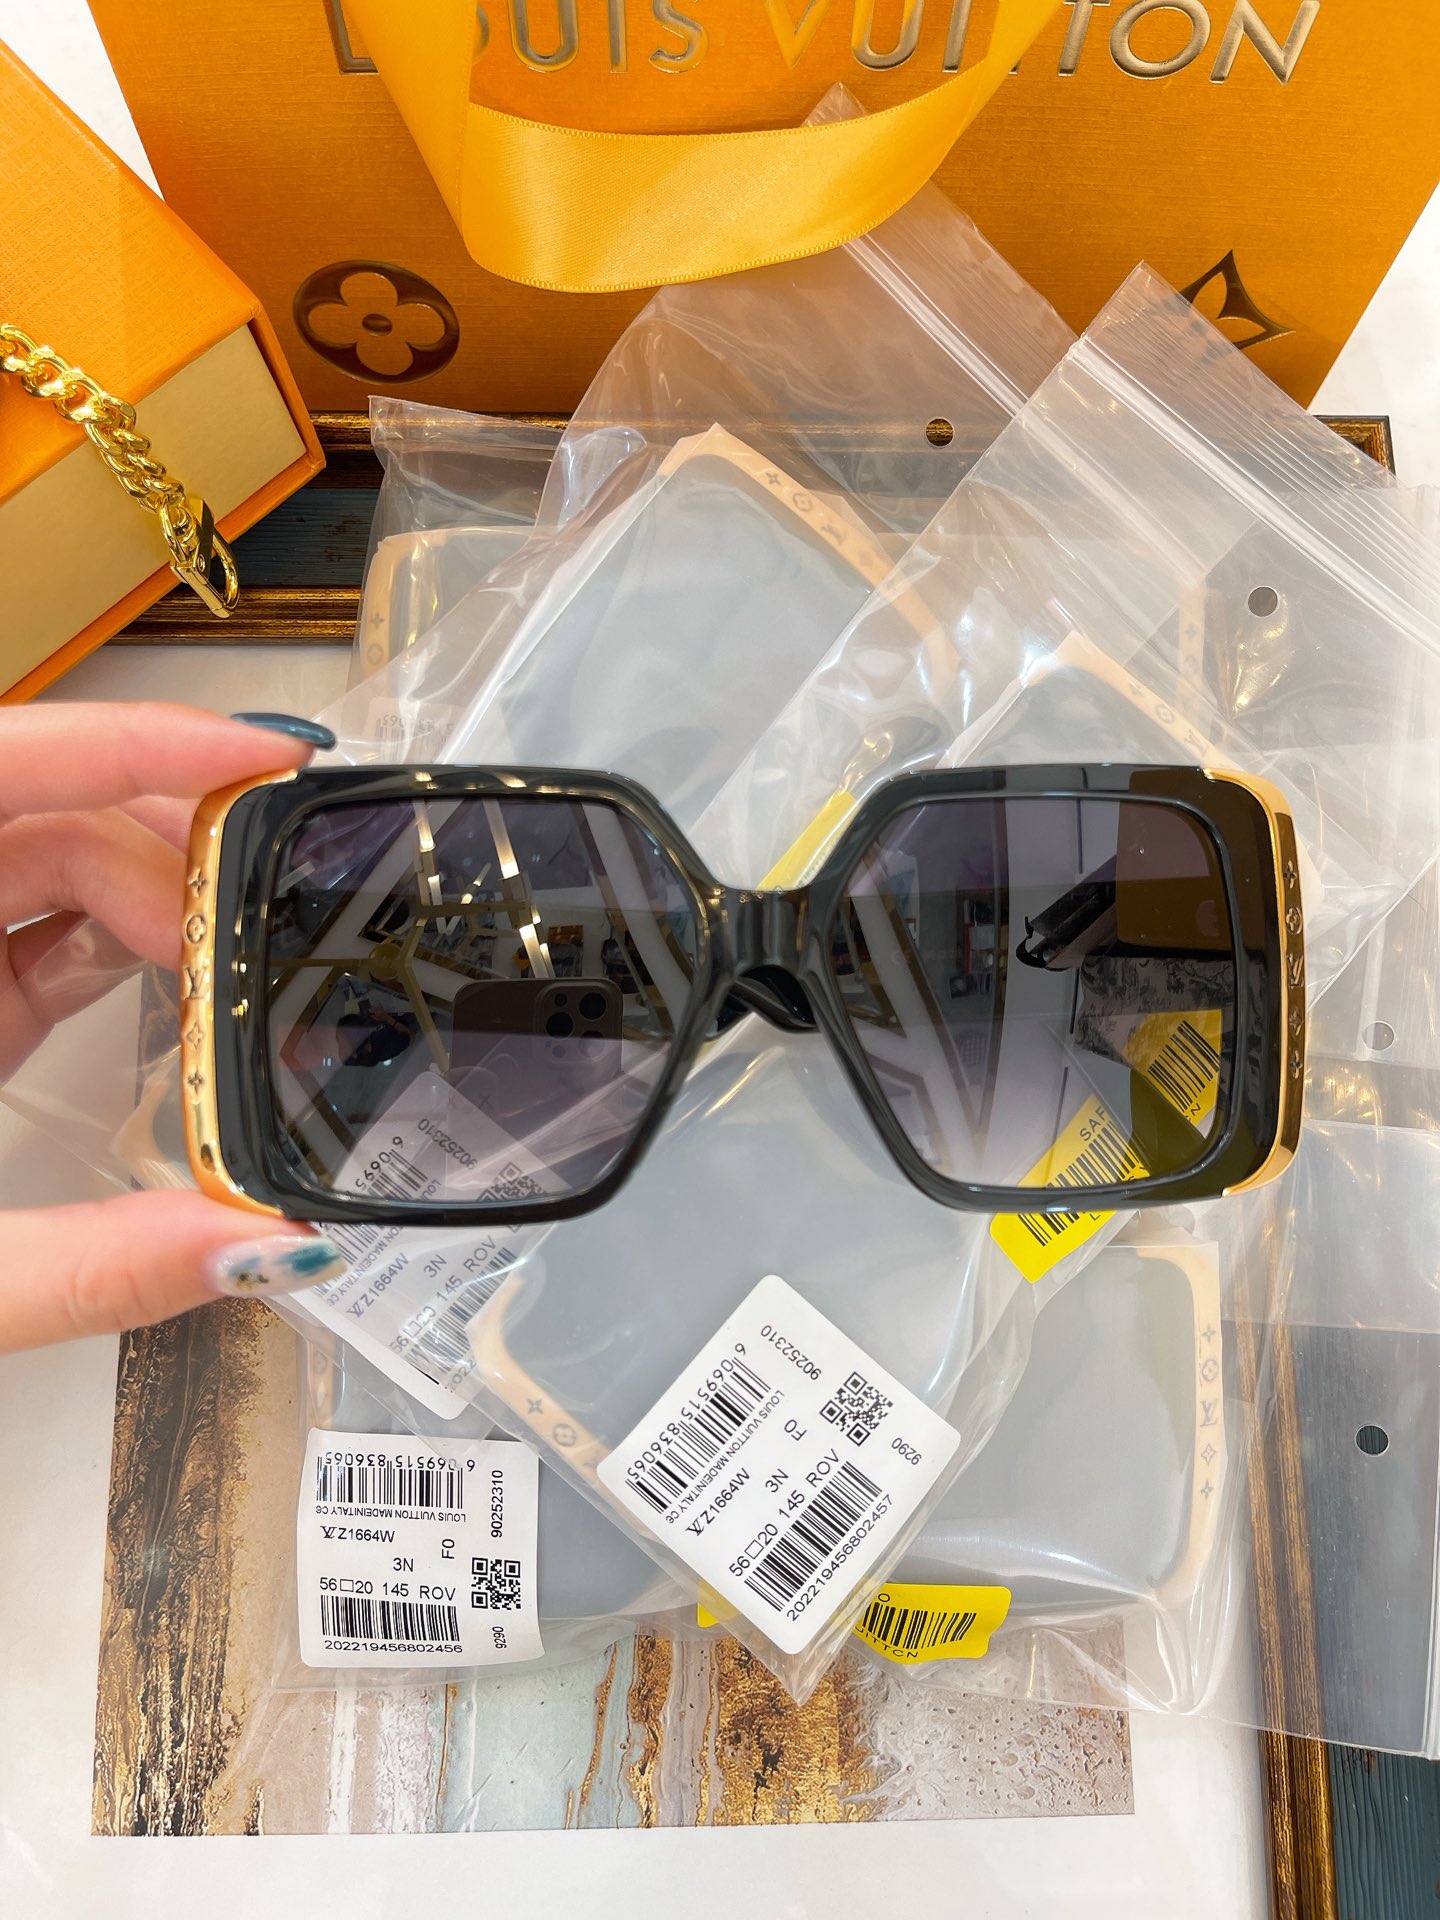 Louis Vuitton Z1998E LV Moon Pearl Square Sunglasses , Black, One Size